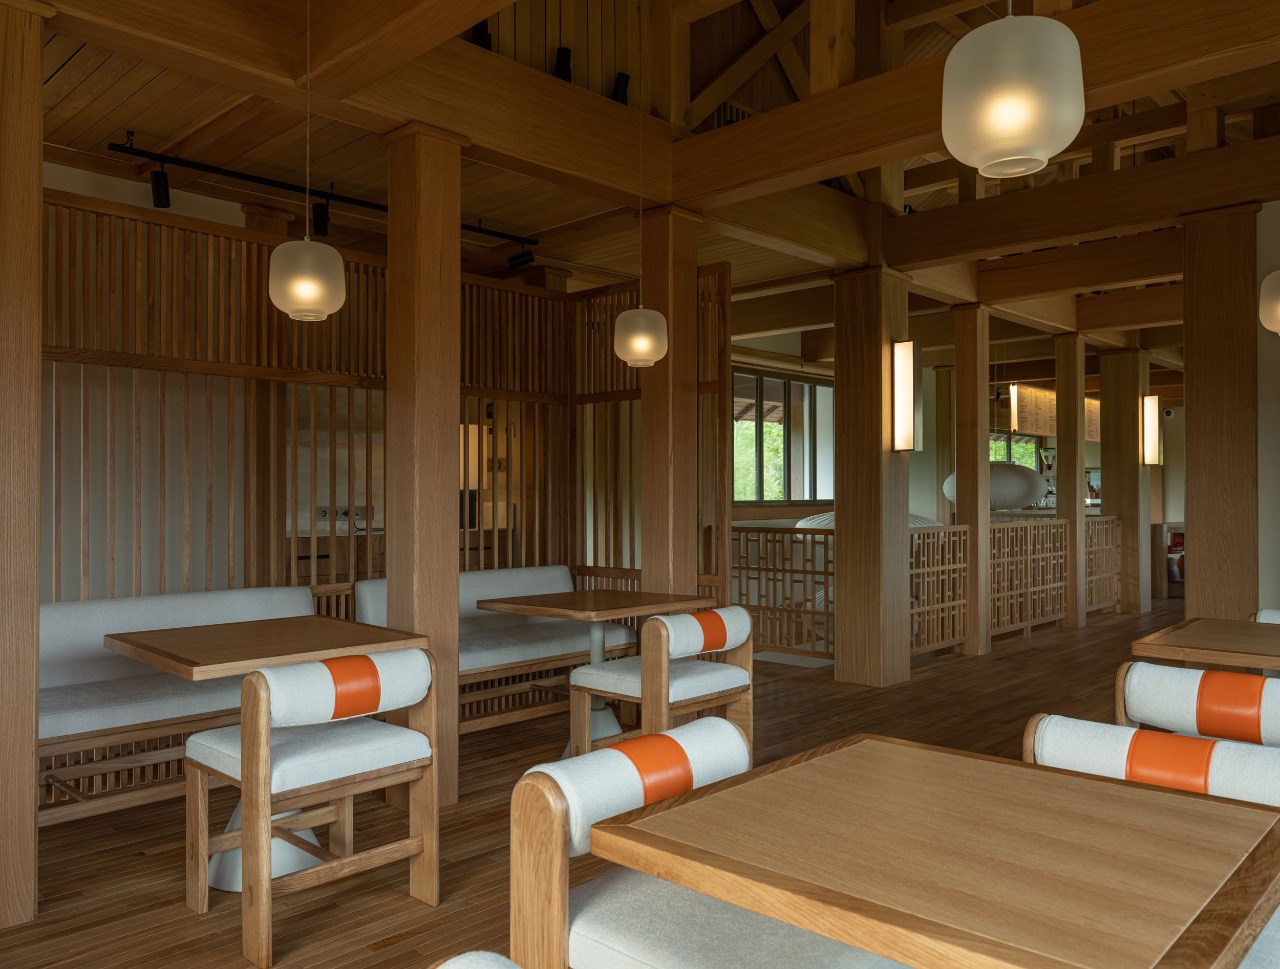 Кофейня киссатэн краснодар. Кафе в стиле Минимализм. Ресторан в японском стиле снаружи. Японский стиль 2023. Проект ресторана.